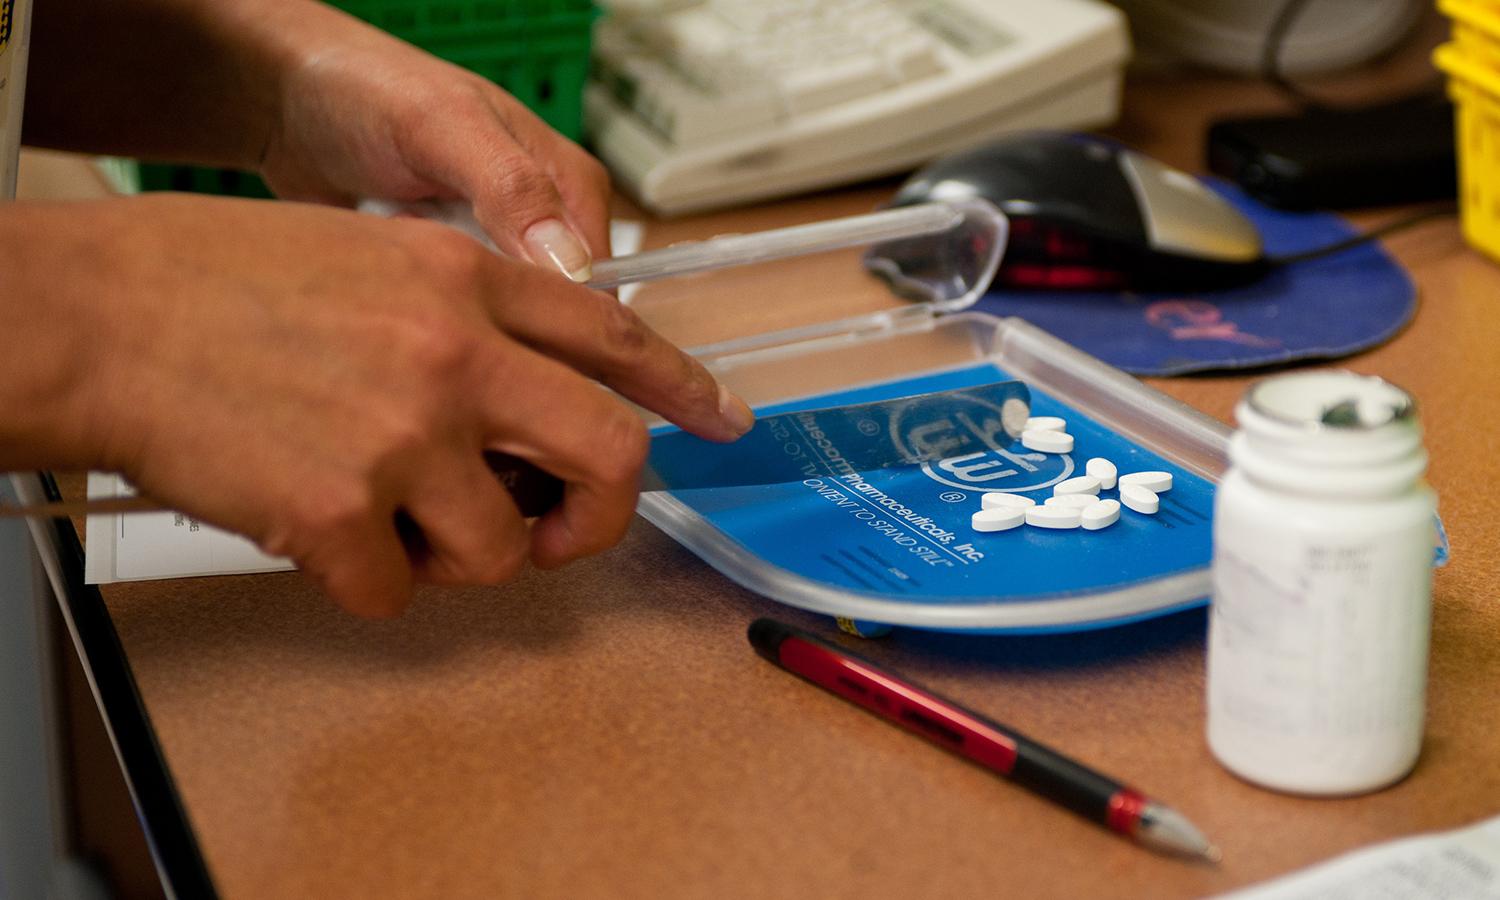 A pharmacy technician counts pills to fill a prescription.